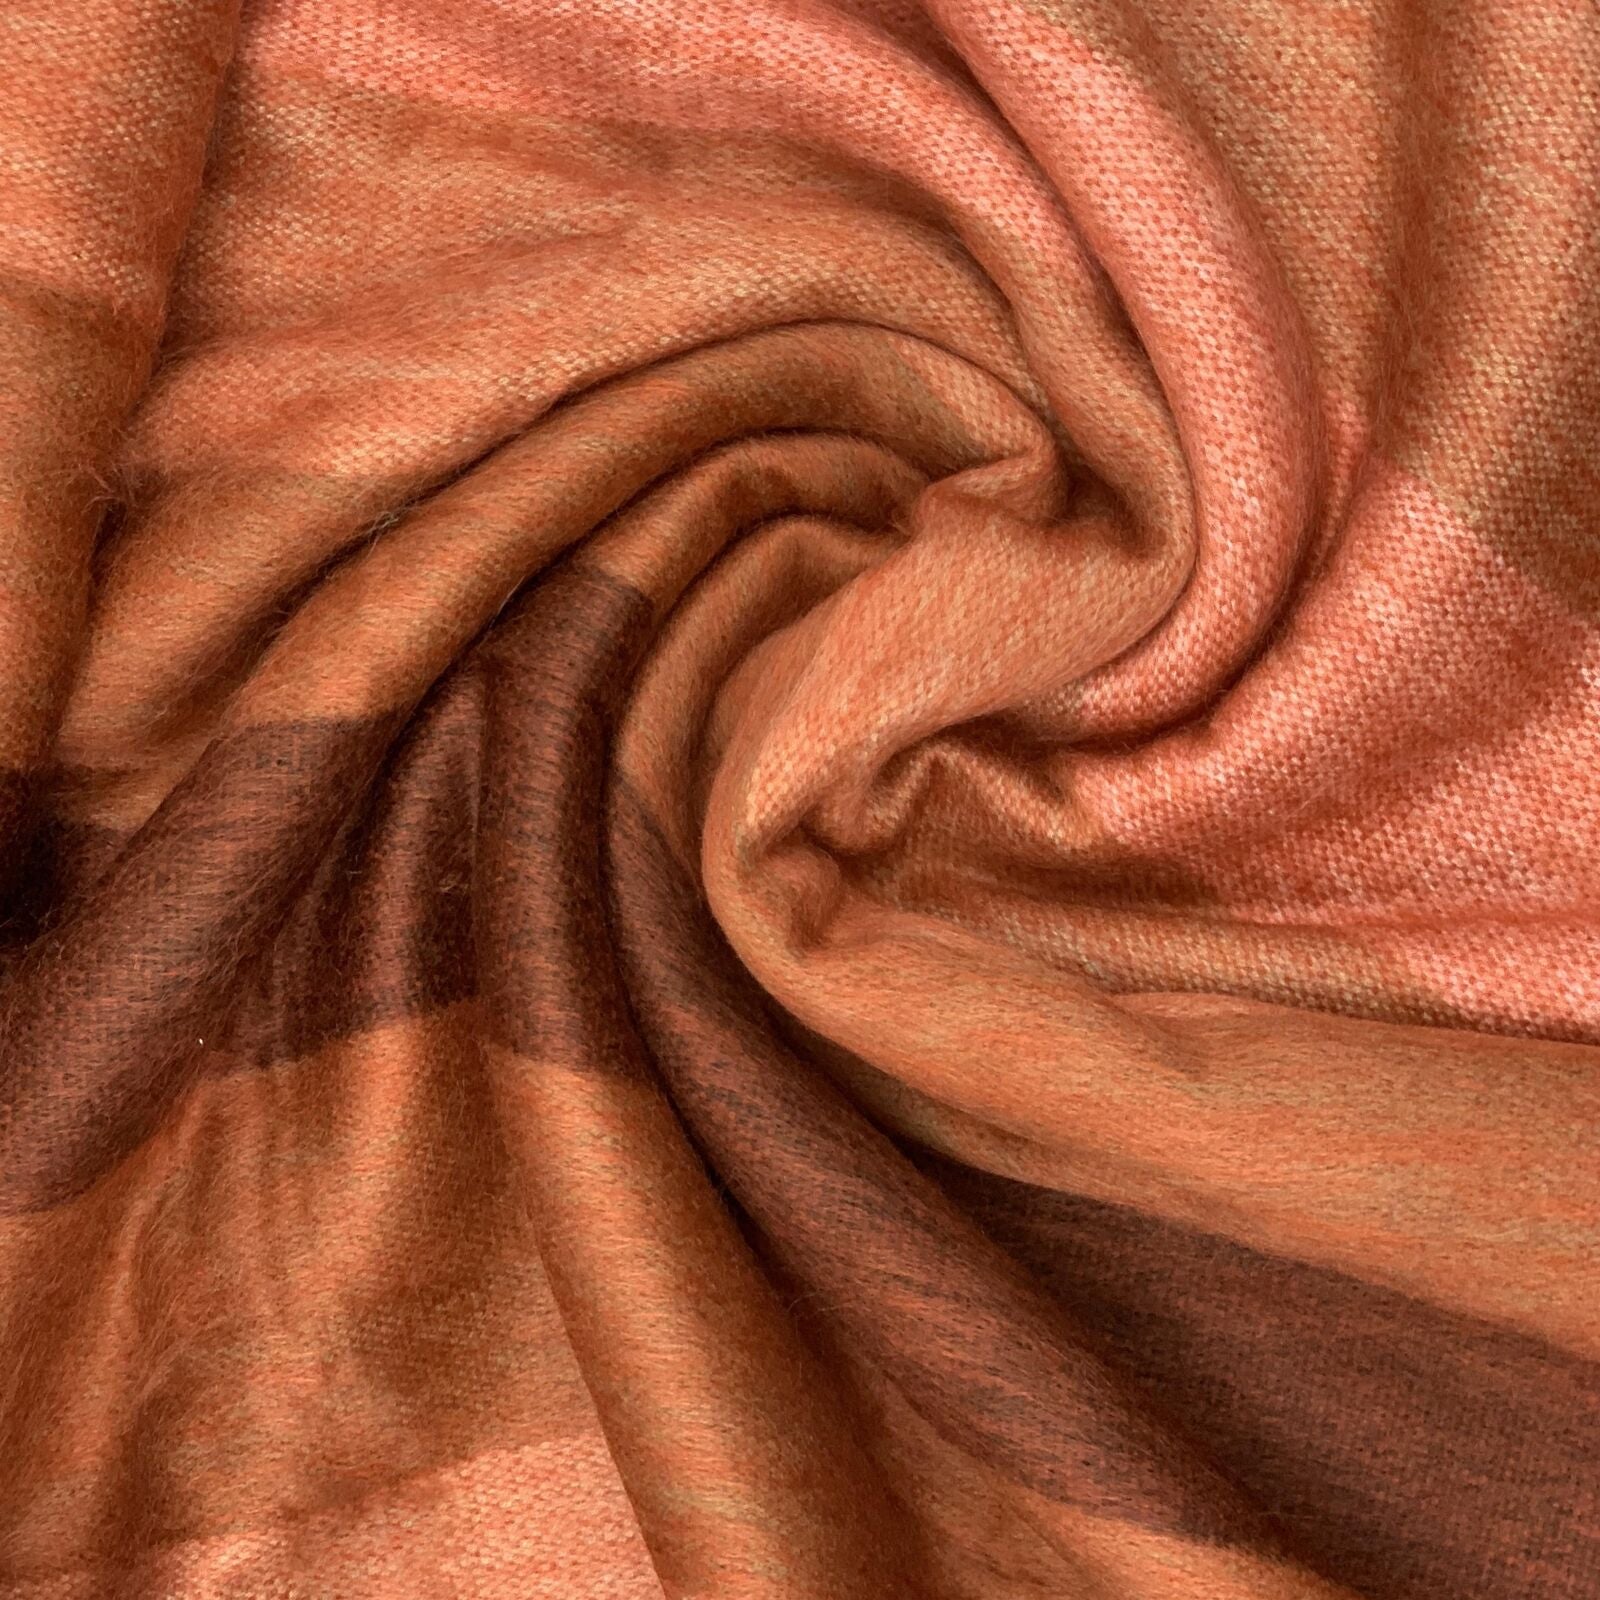 Yatzaputzan - Baby Alpaca Wool Throw Blanket / Sofa Cover - Queen 90" x 65" - thick stripes pattern